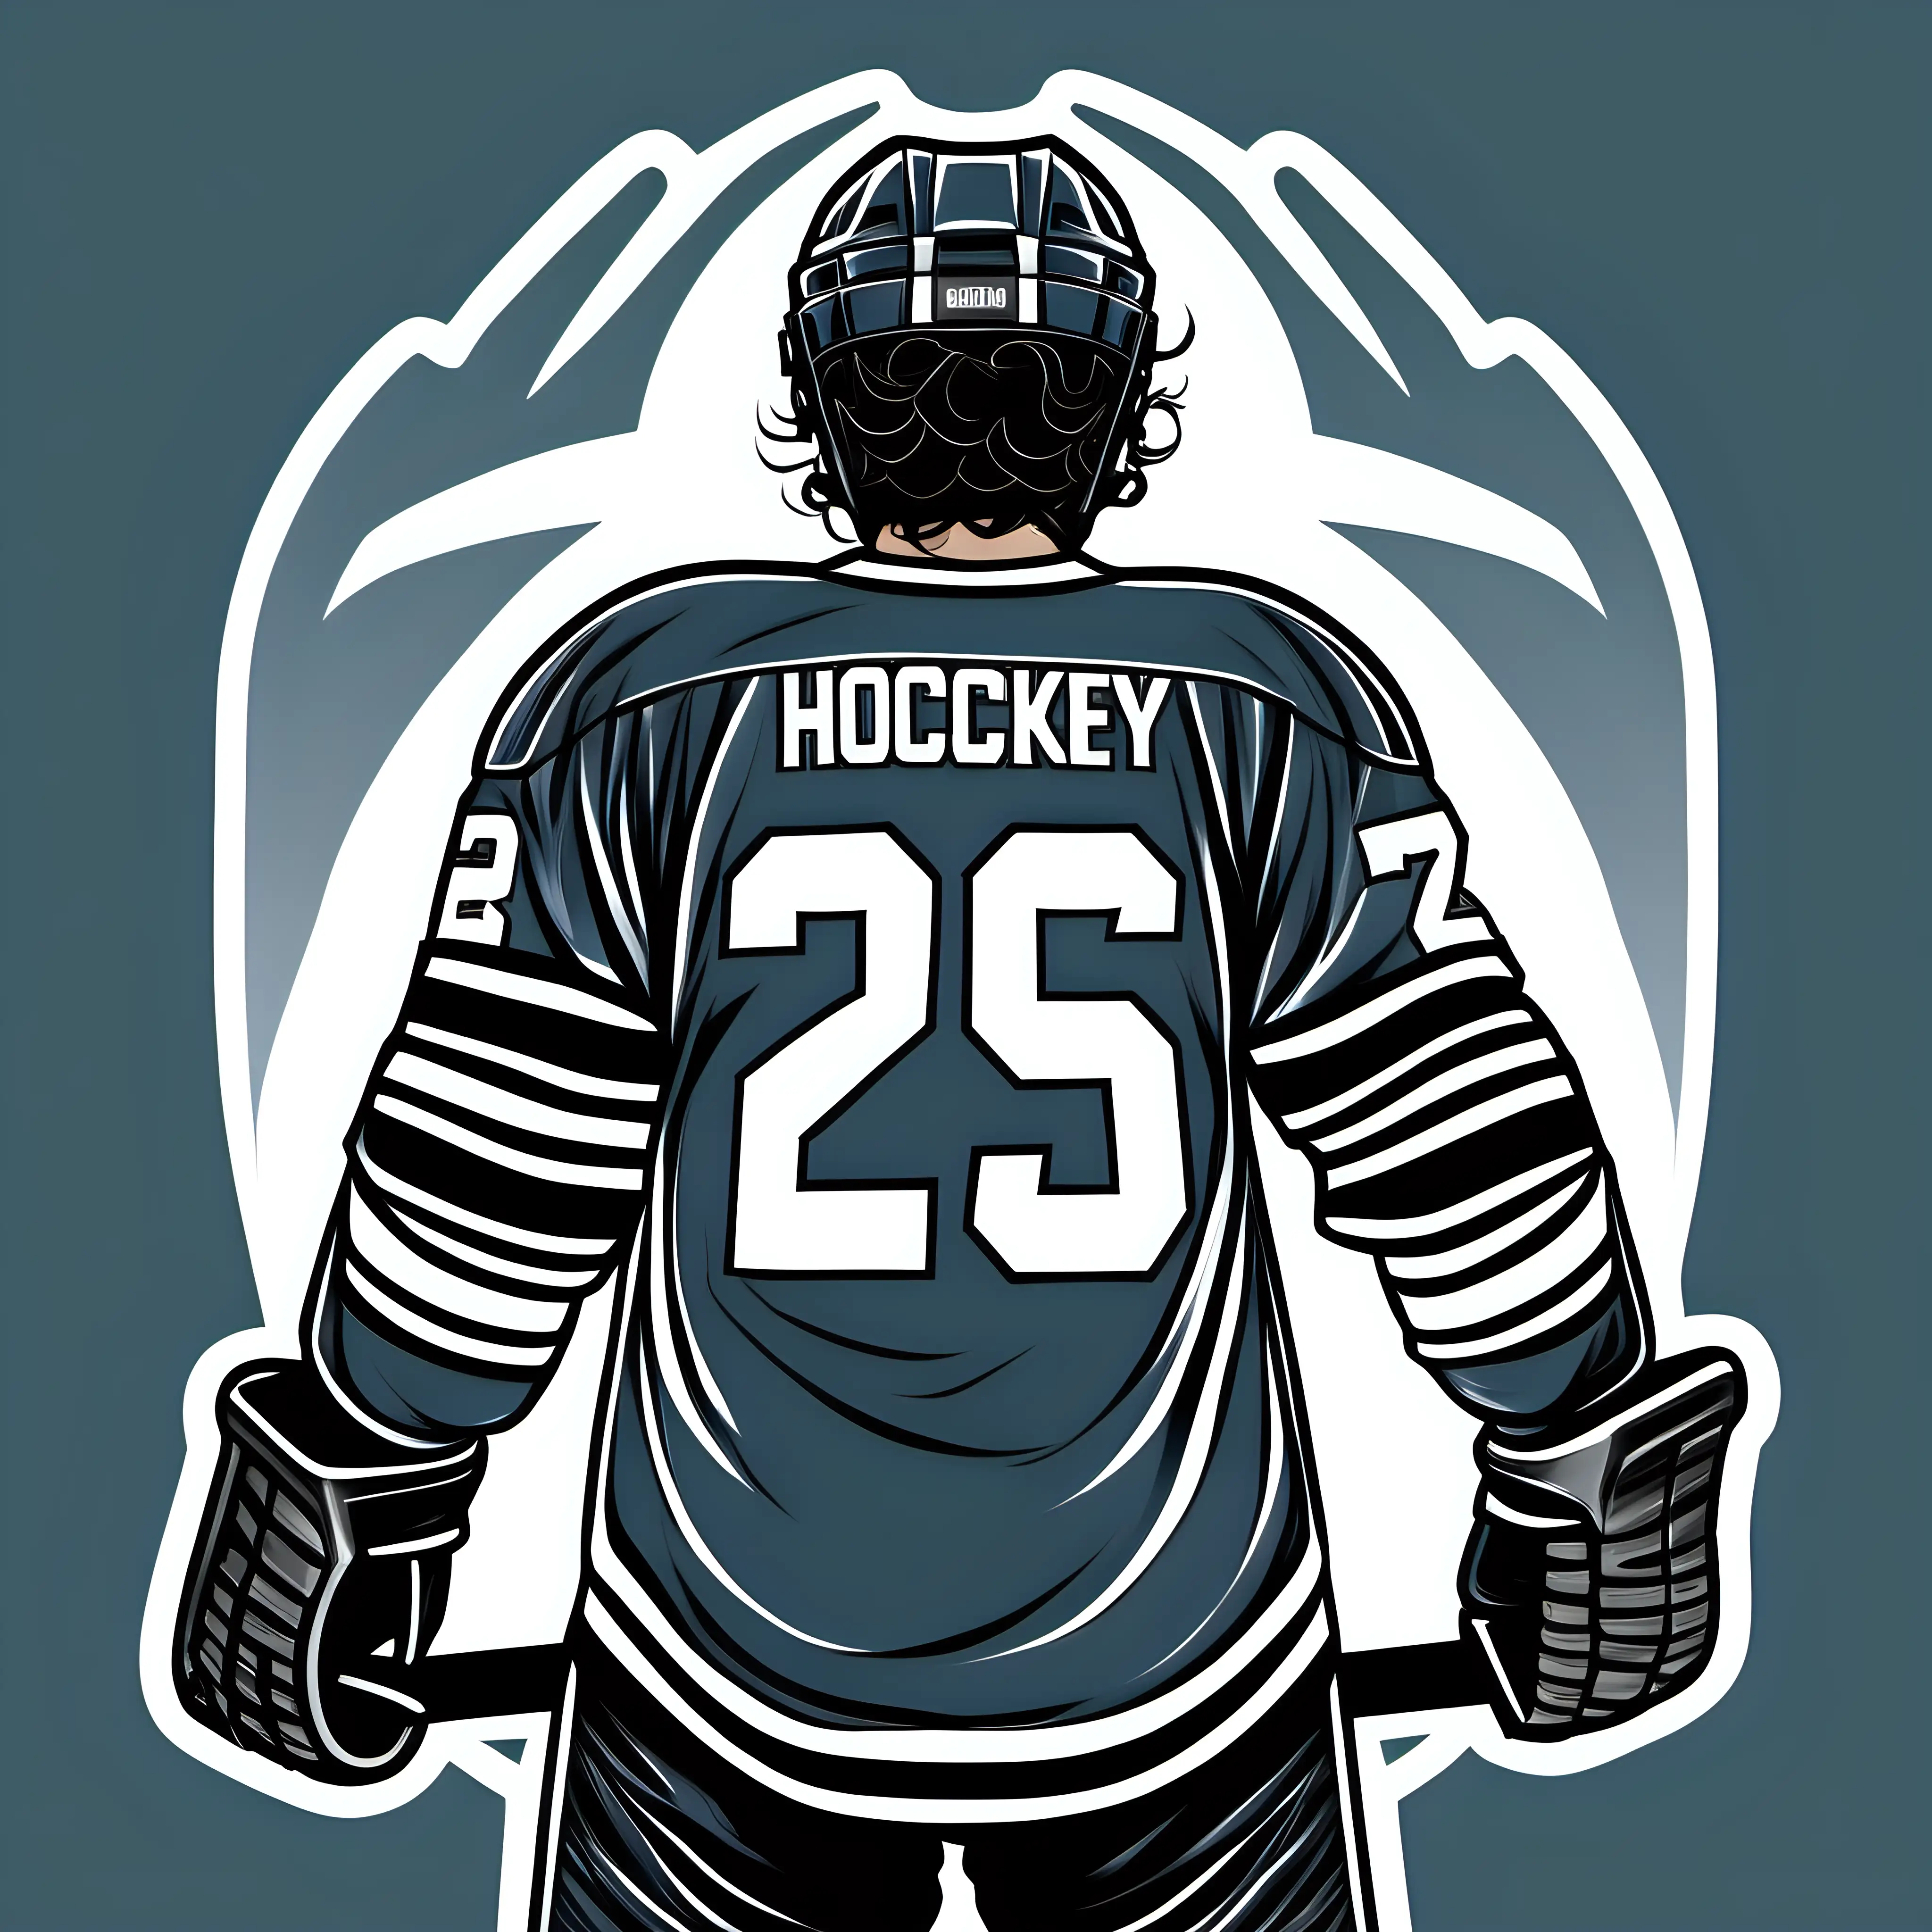 hockey player from behind, helmet on, wavy hair, black hair, black thick outline